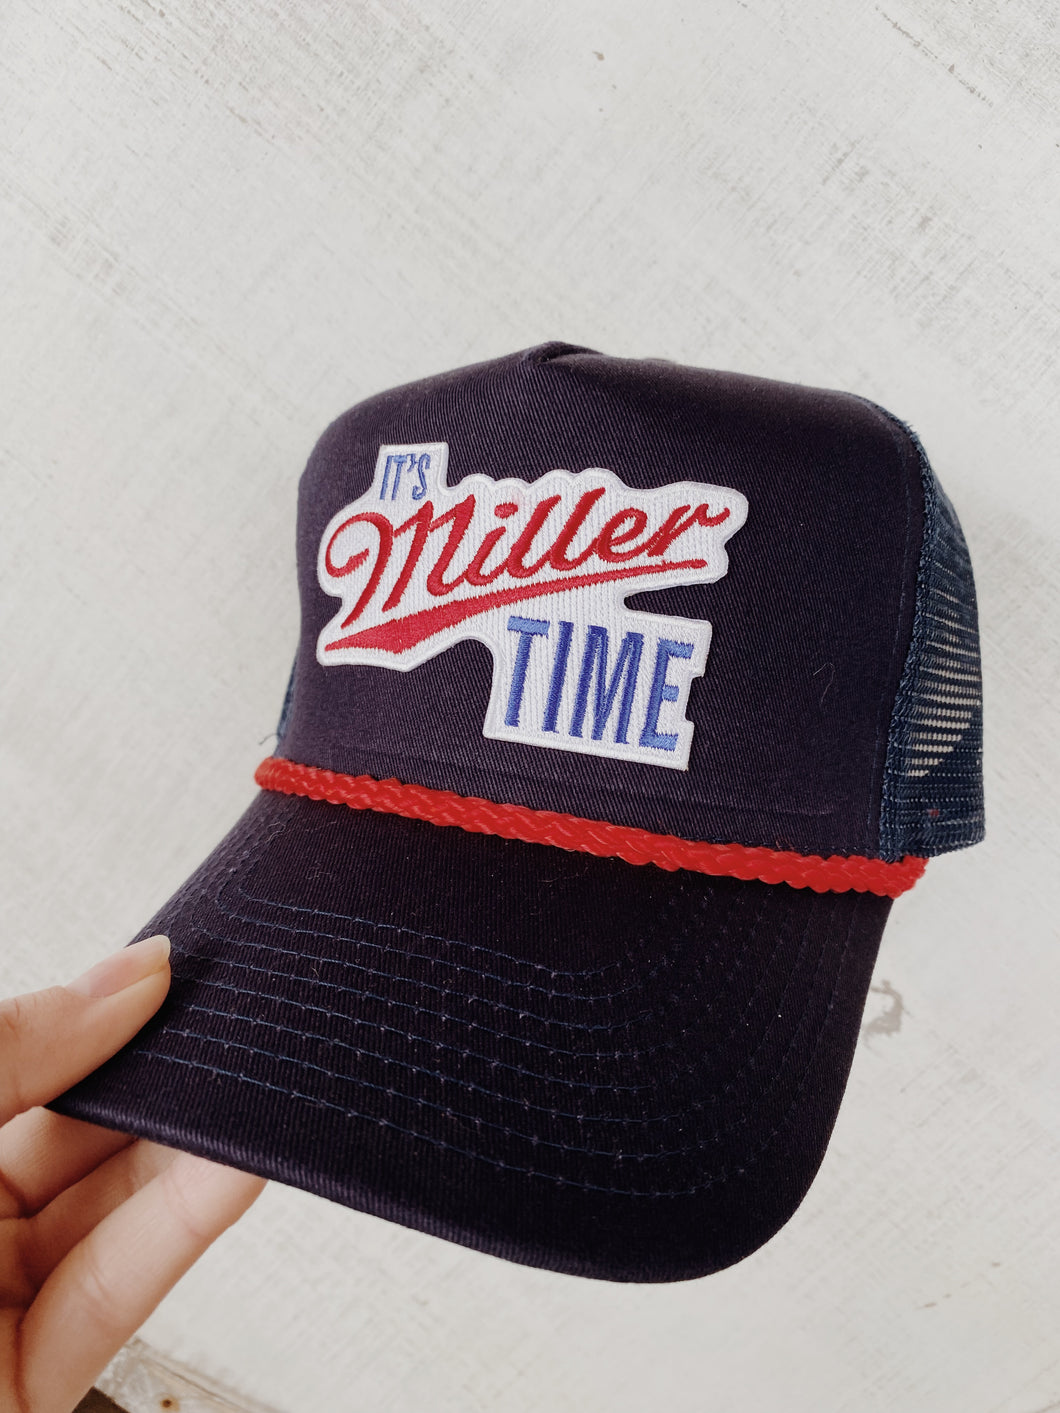 It’s Miller Time Hat